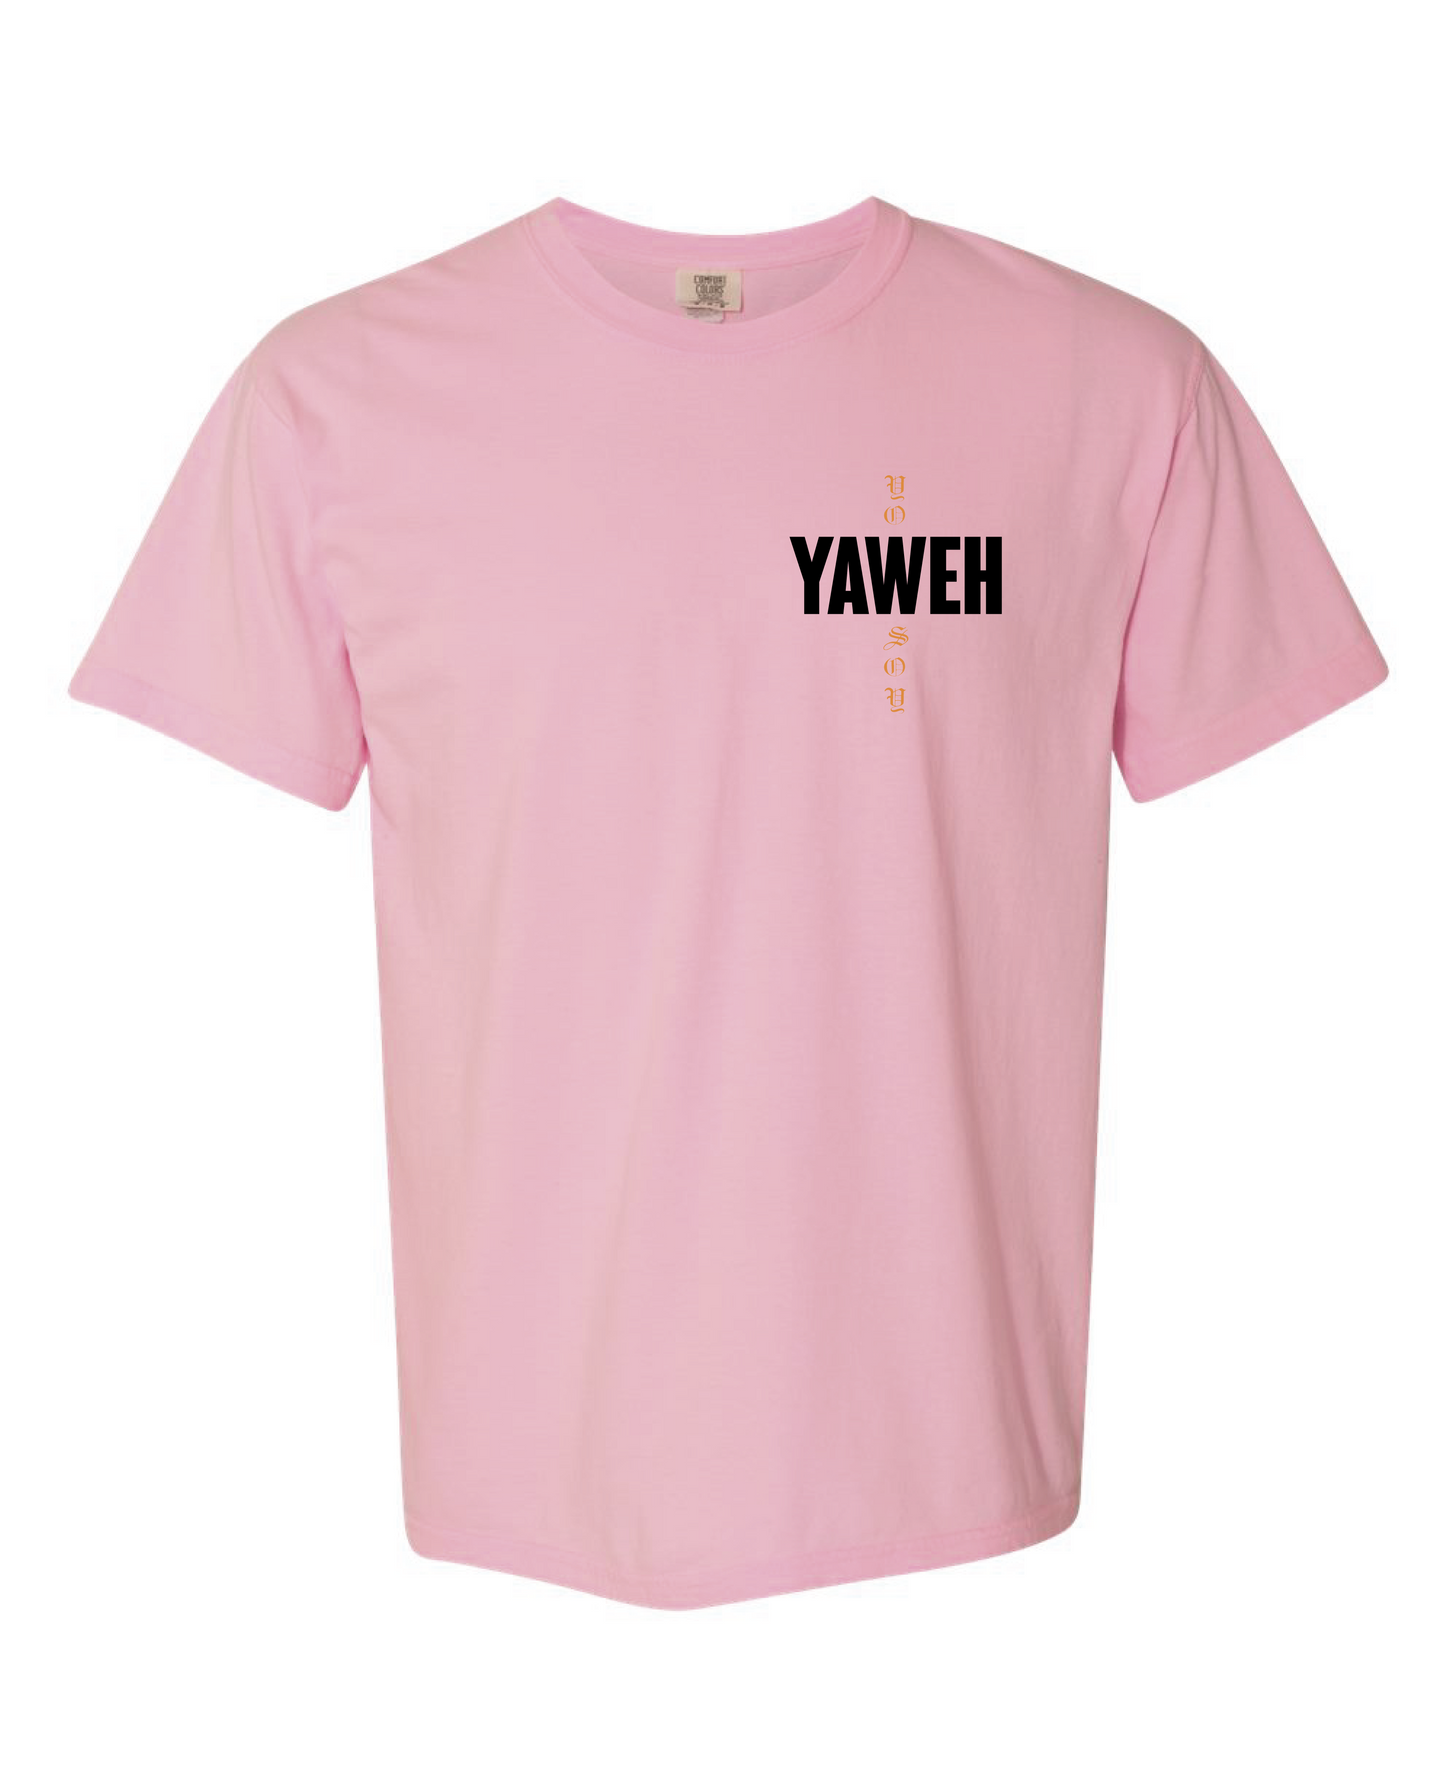 T-shirt YAHWEH